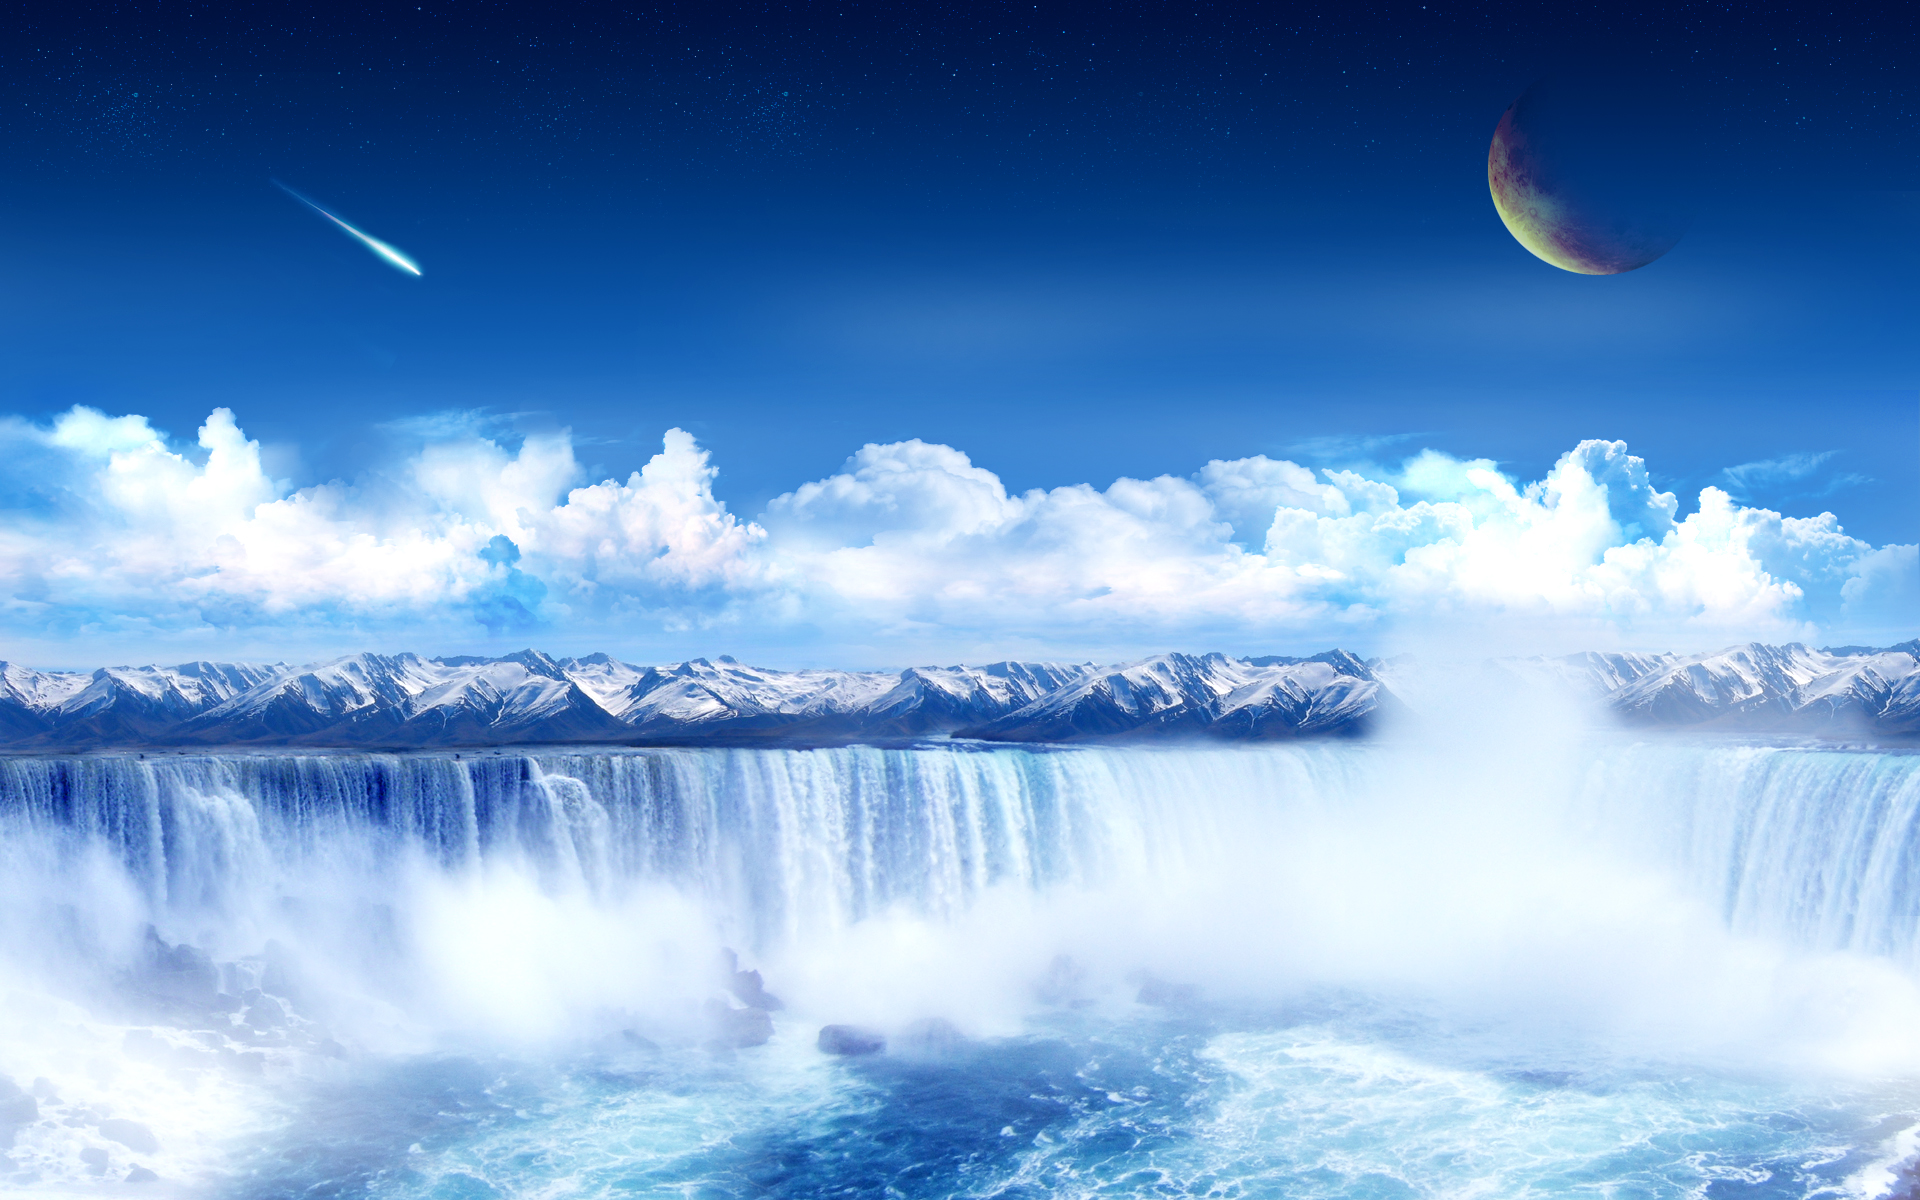 Waterfall Blue Clouds Mist Hd Wallpaper Creative And Fantasy Wallpaper Better